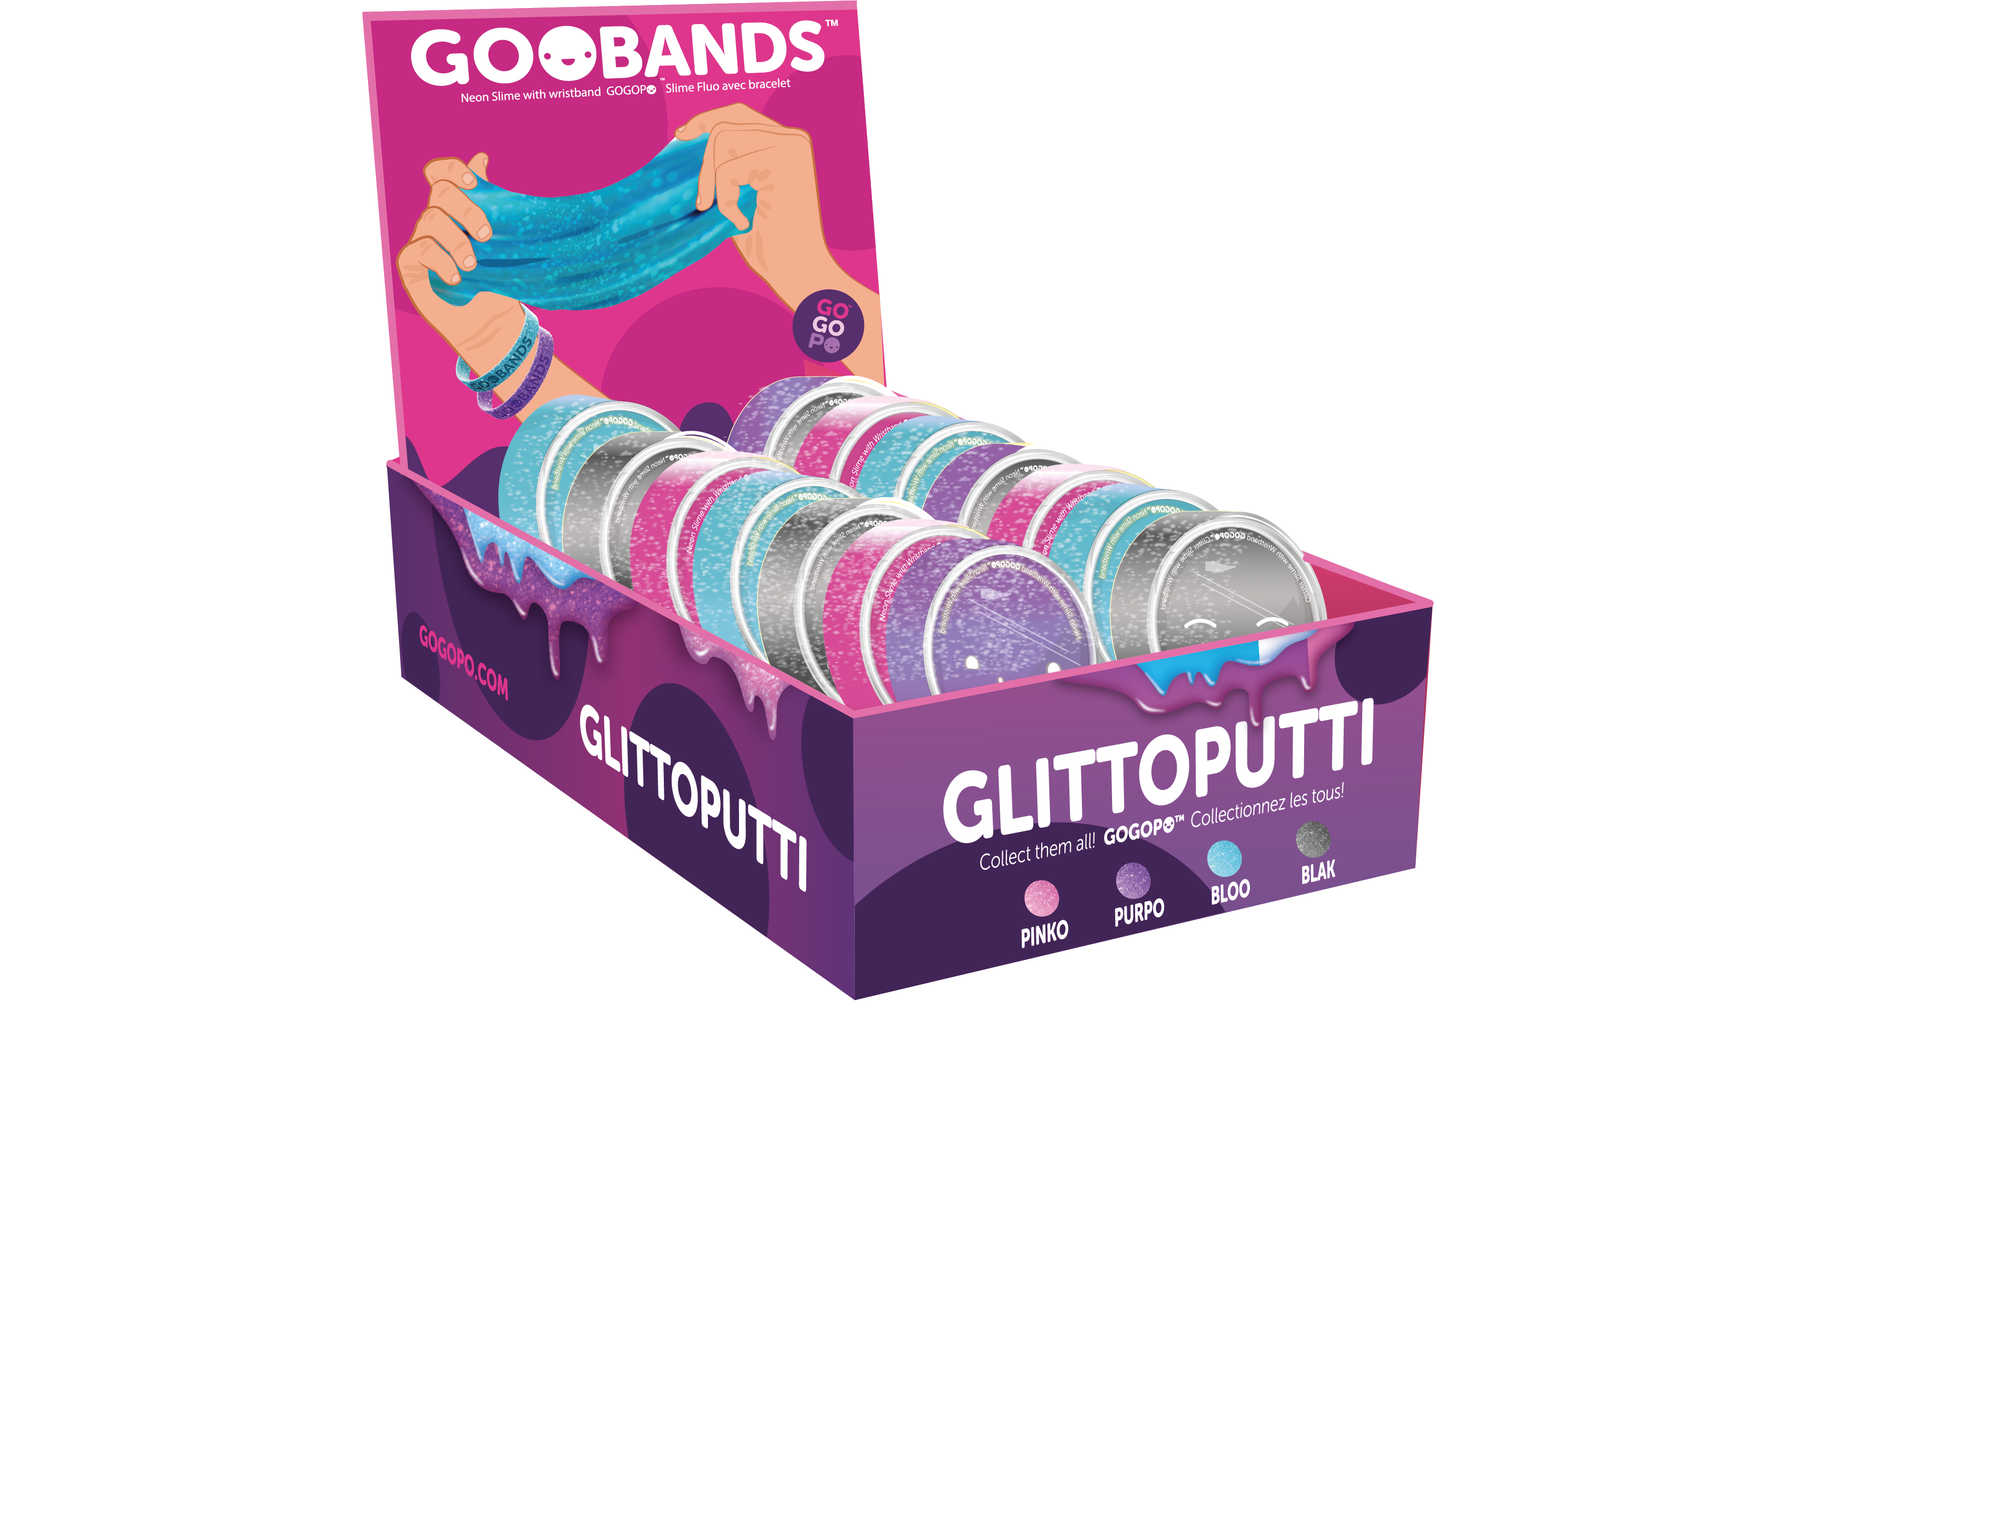 Goobands Glittoputti With Wristband